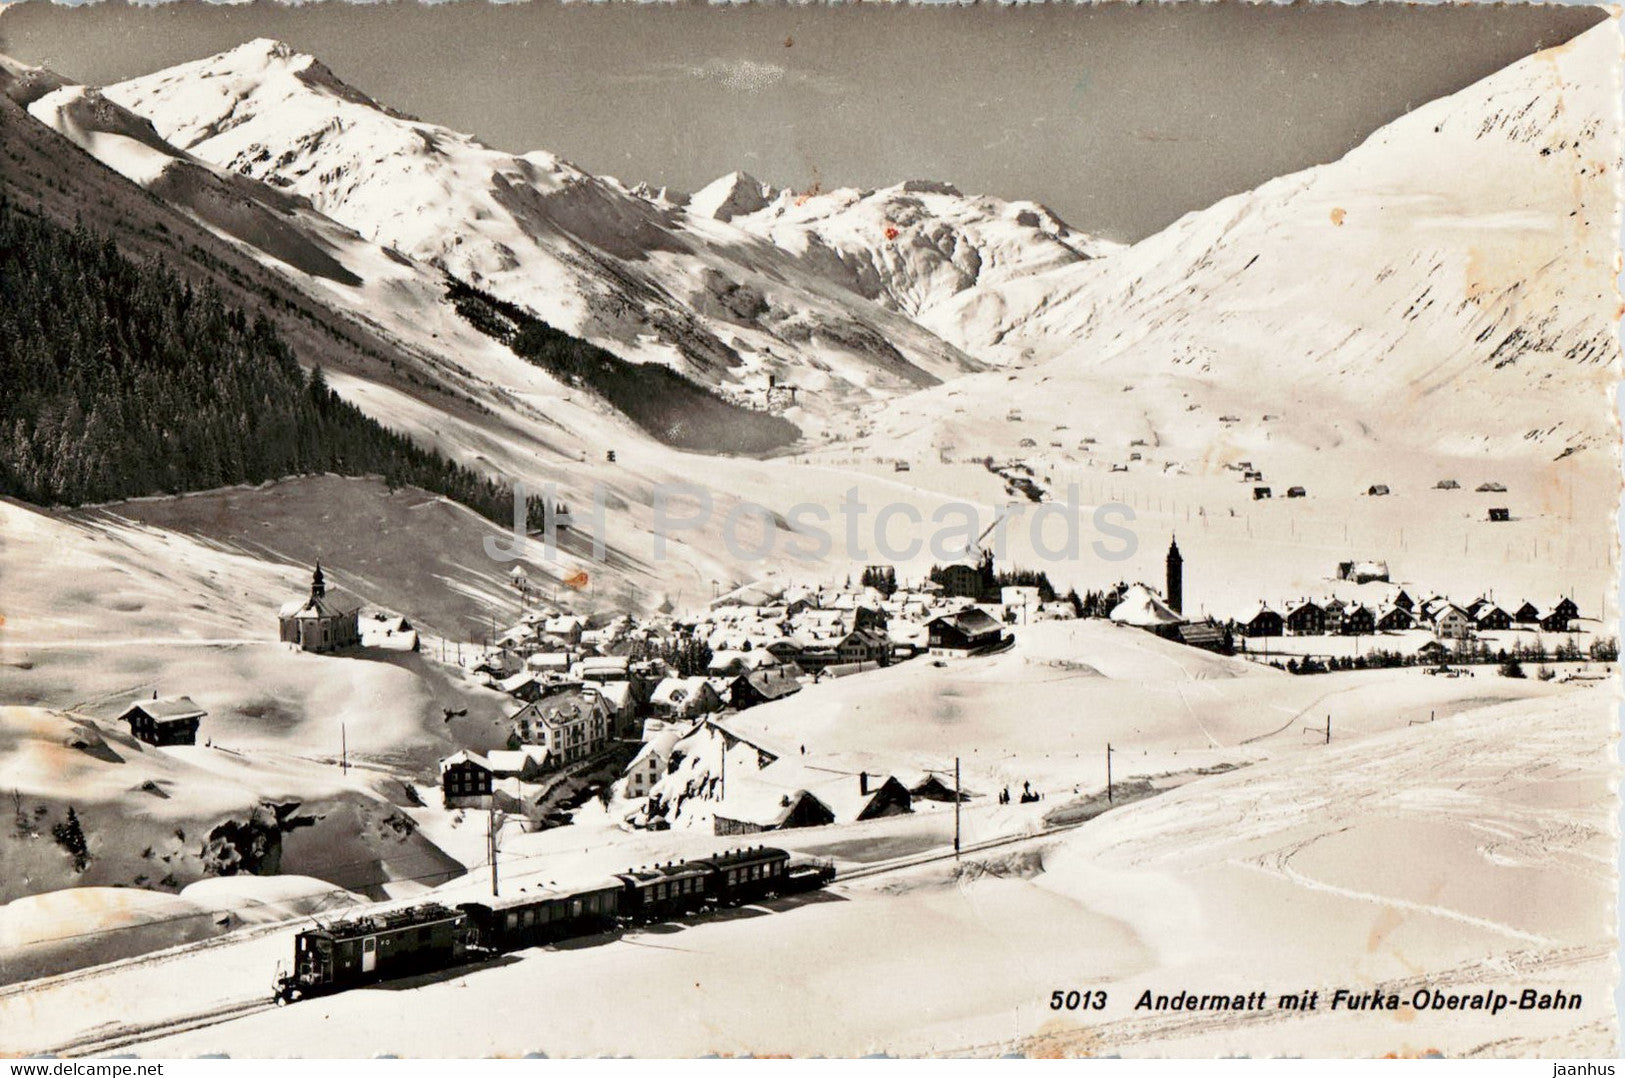 Andermatt mit Furka Oberalp Bahn - railway - train - Feldpost - 5013 - old postcard - Switzerland - used - JH Postcards